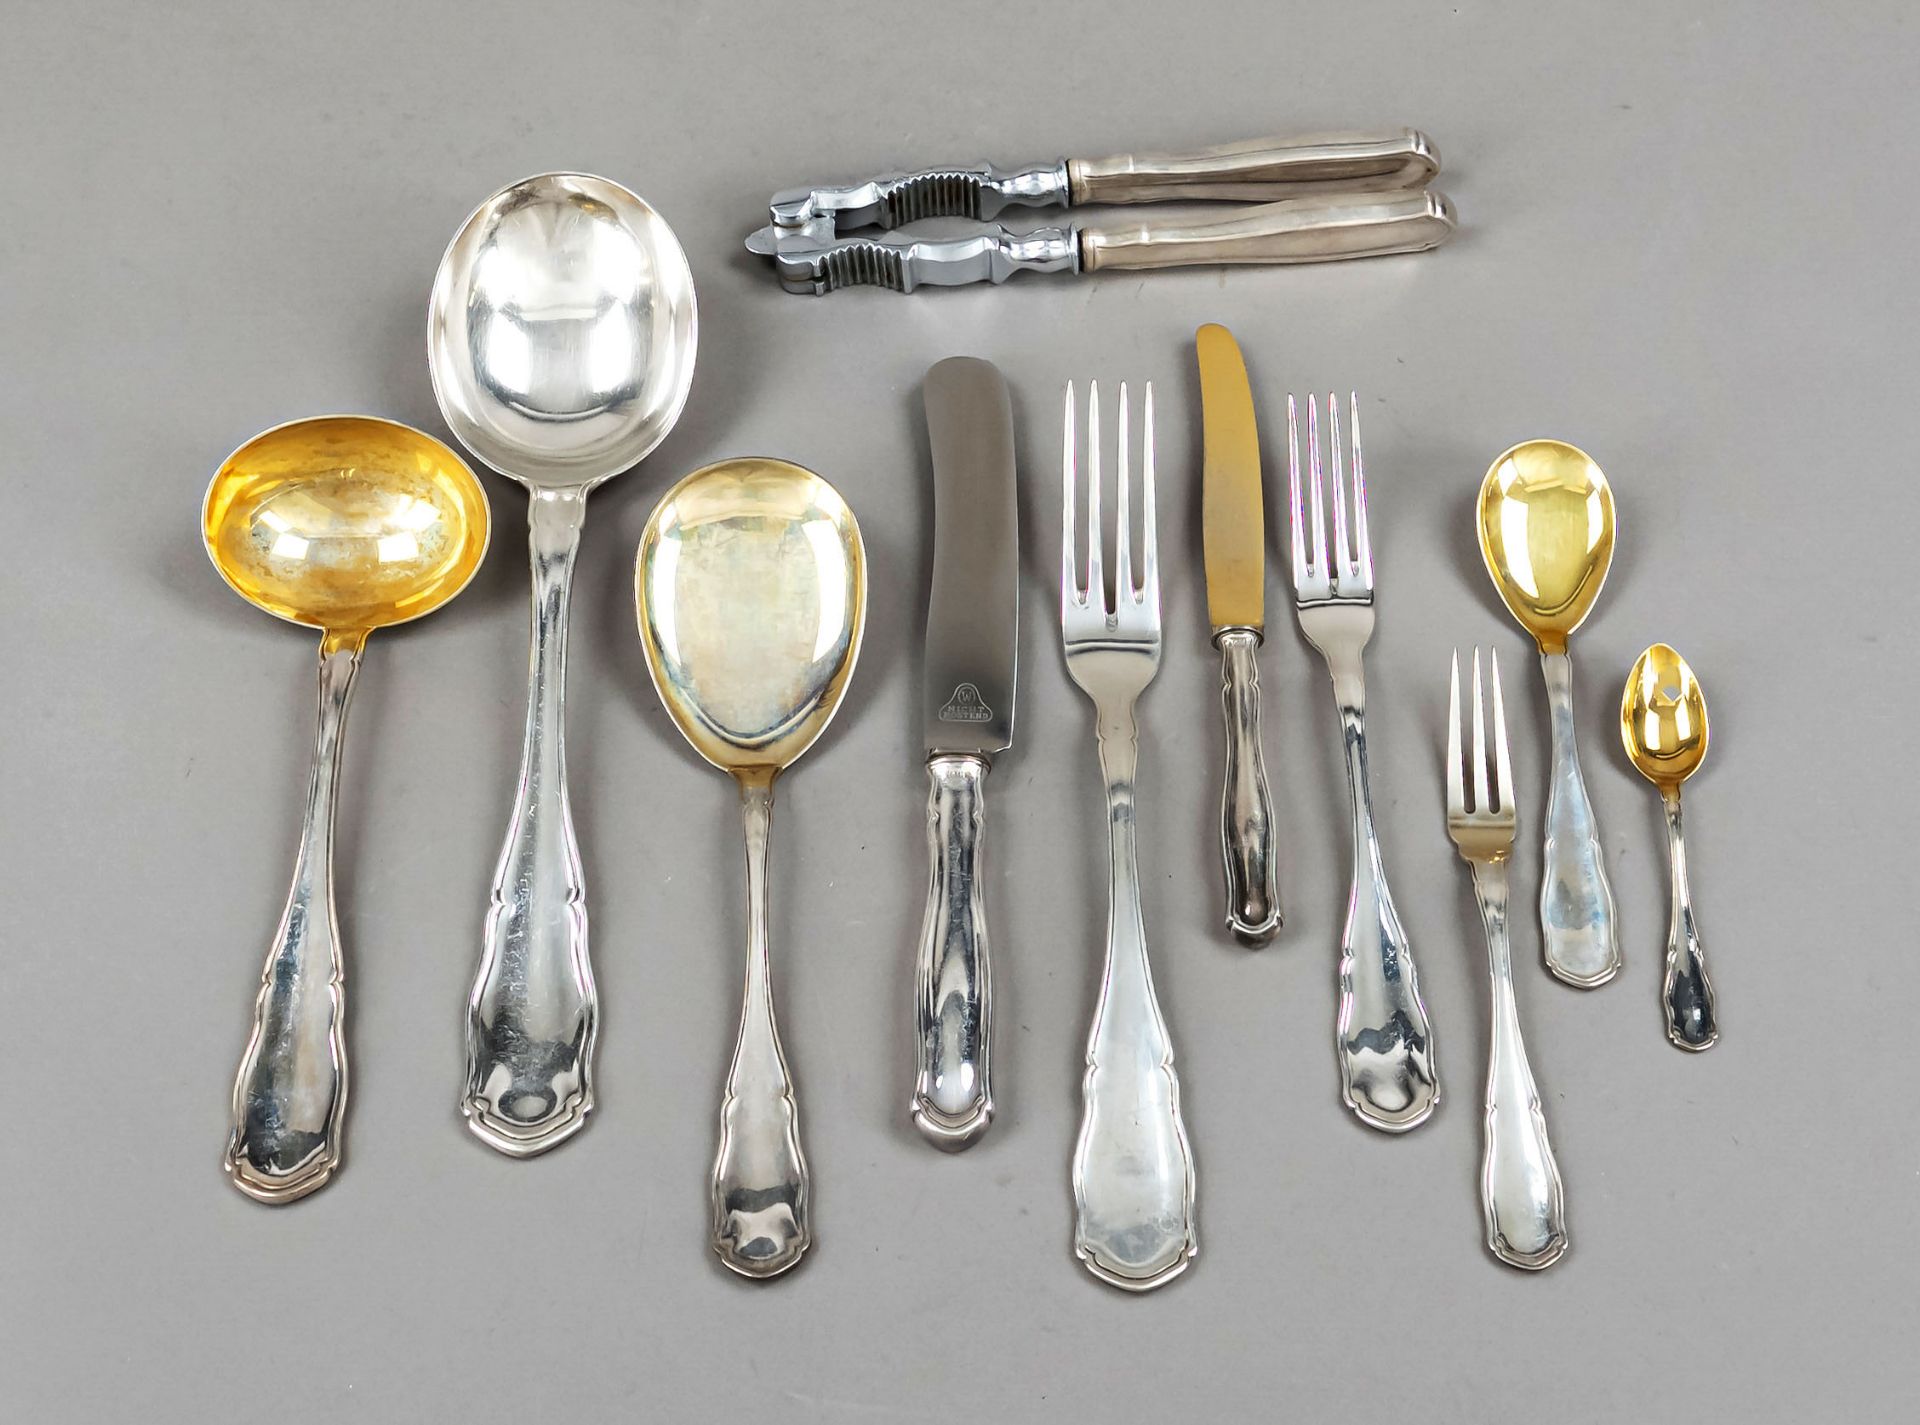 Cutlery for six persons, German, 20th century, maker's mark Bruckmann & Söhne, Heilbronn, silver